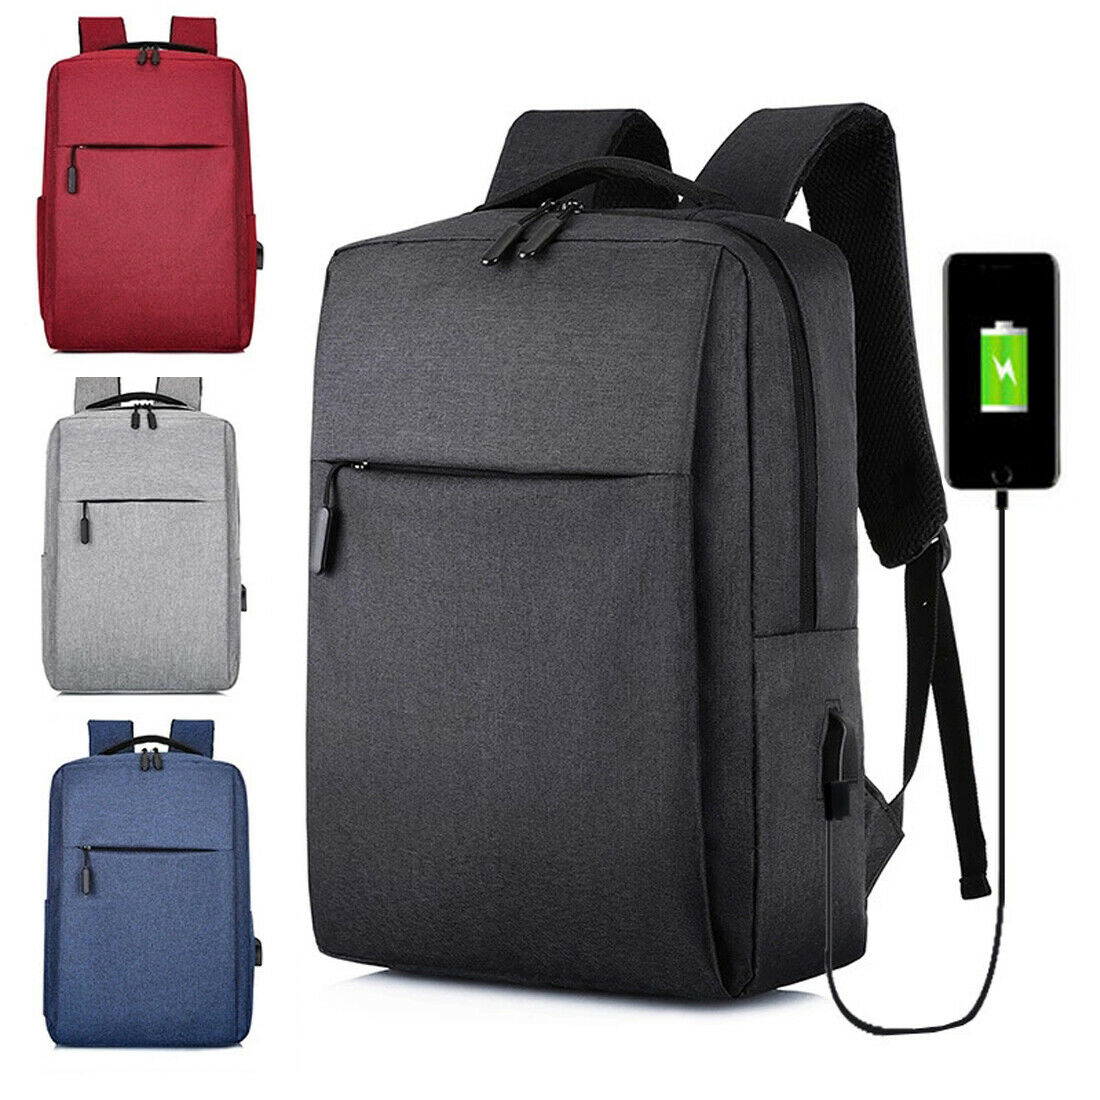 Novaa Bags 16" Slim Casual Waterproof Laptop Backpack with USB Charging Port Black - image 1 of 5